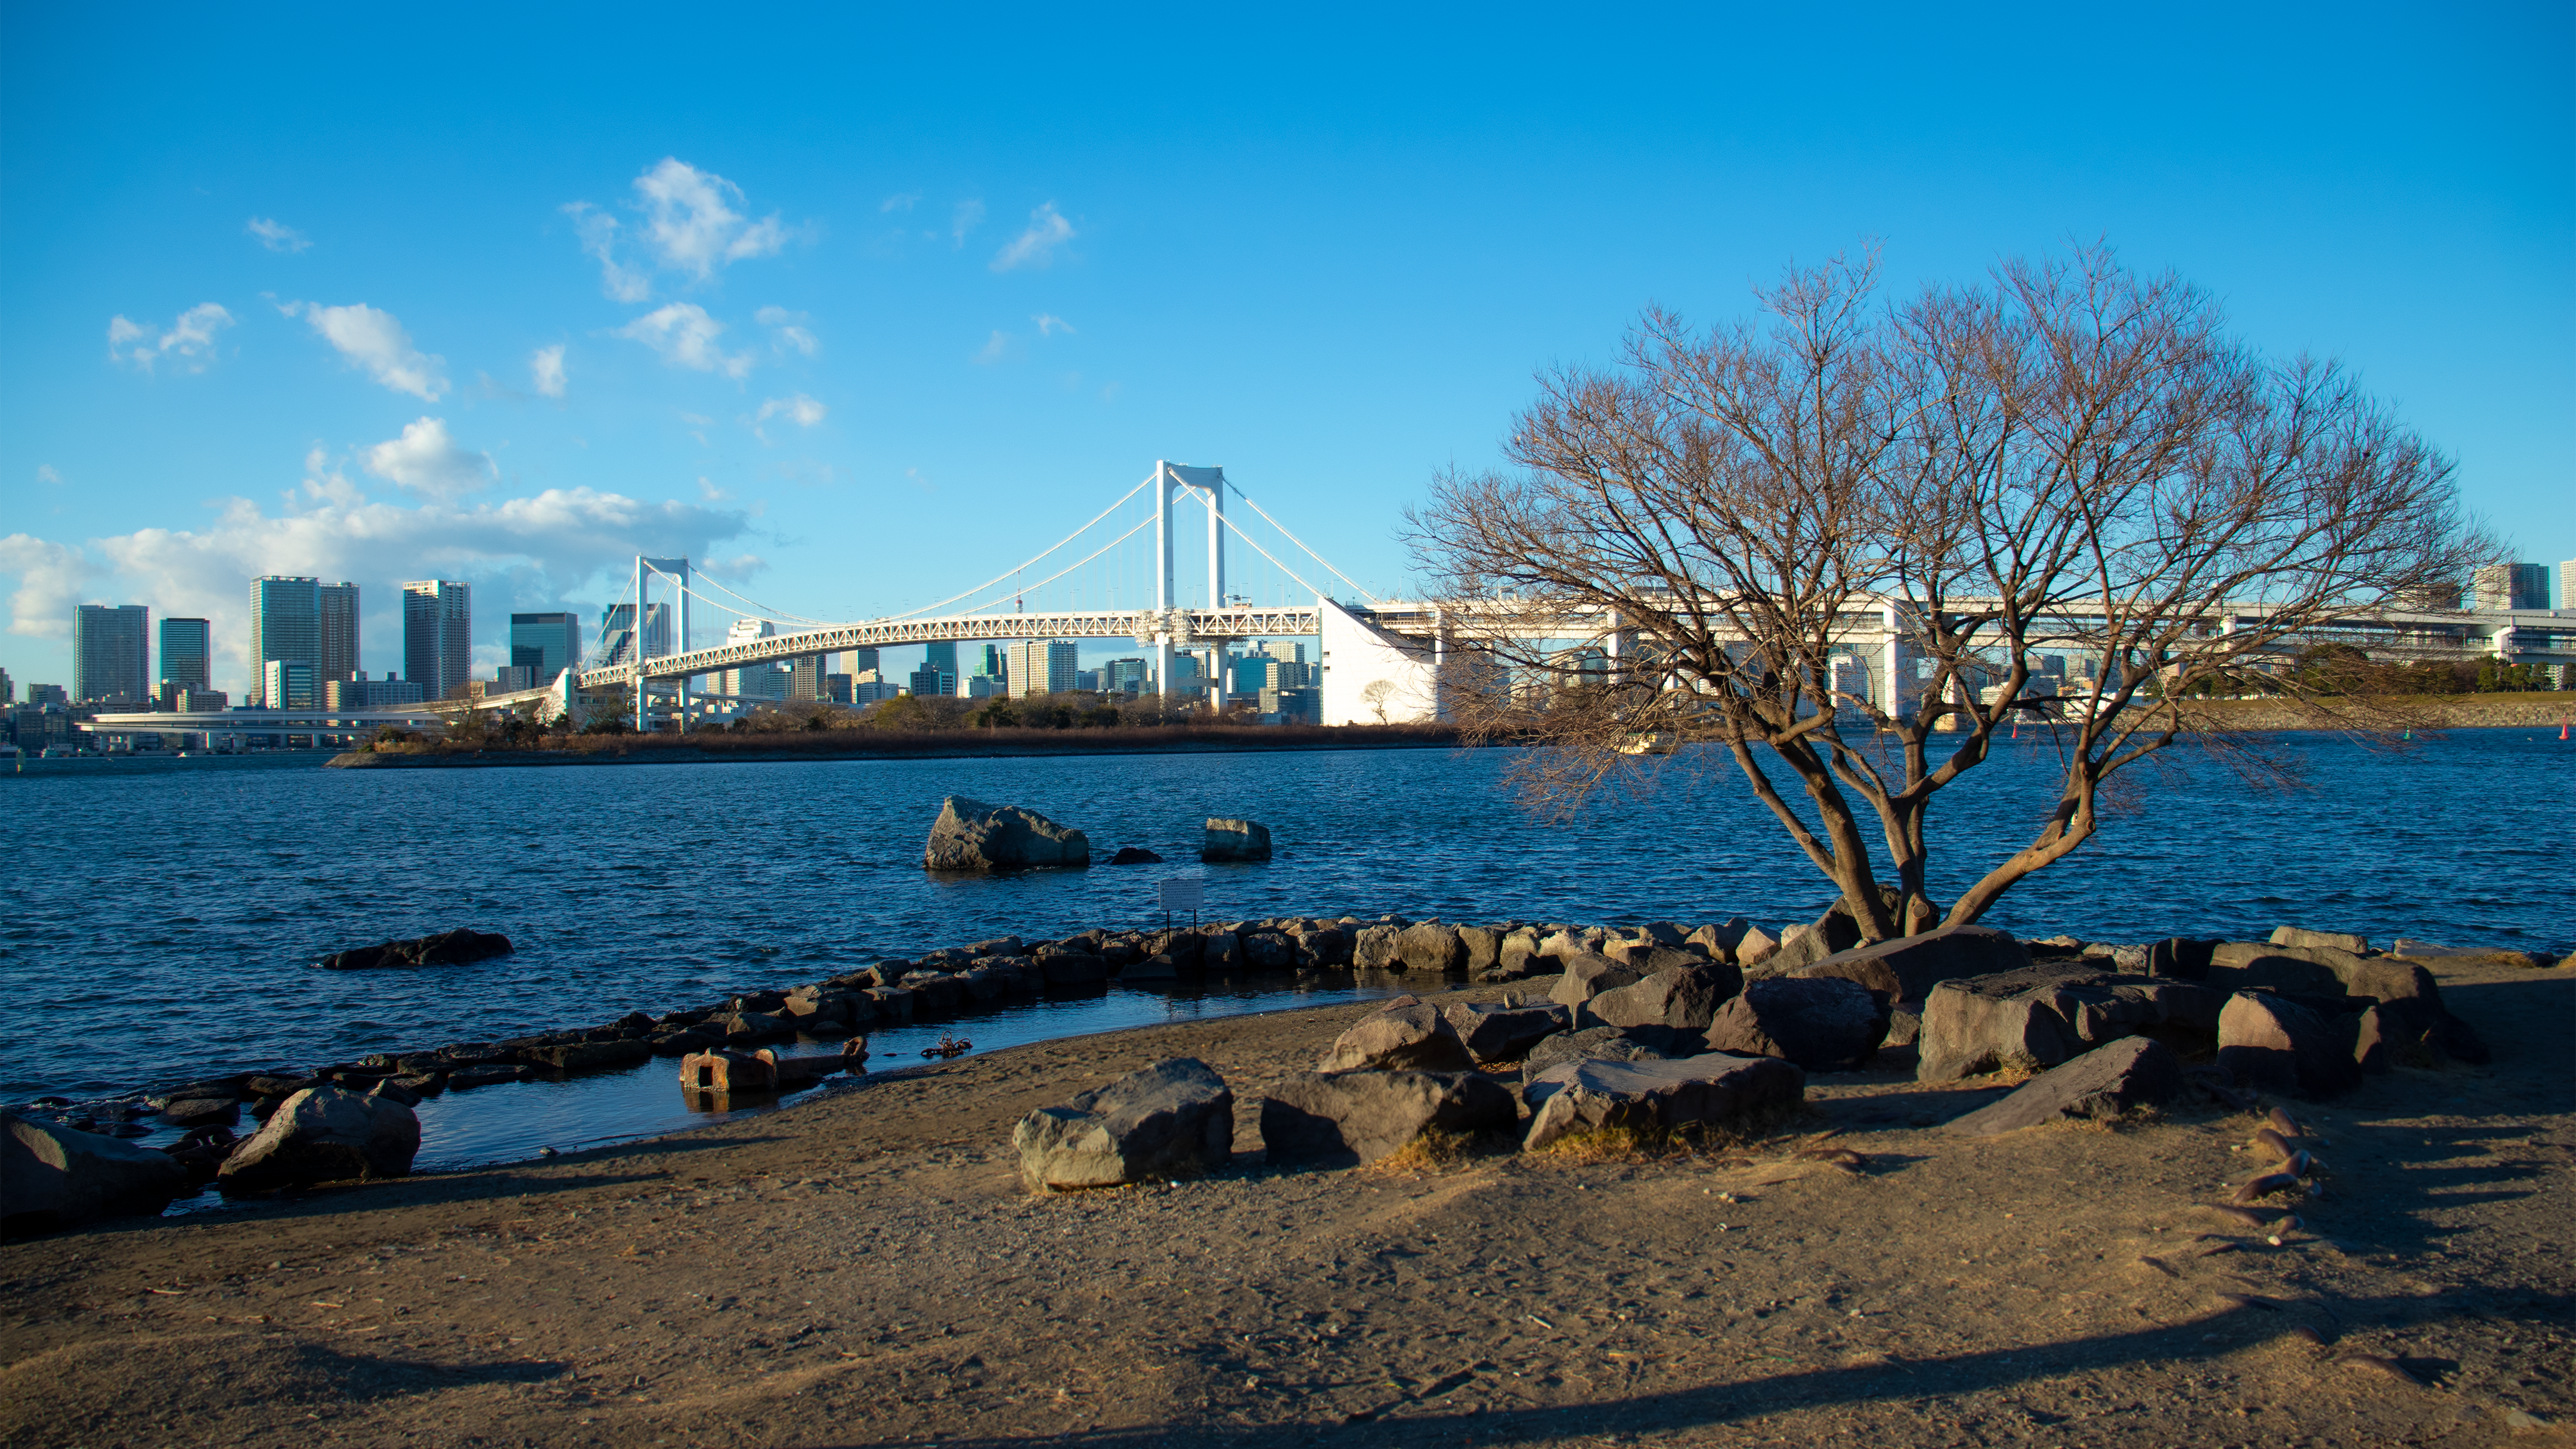 General 4320x2430 Japan odaiba Rainbow Bridge beach rocks trees Tokyo